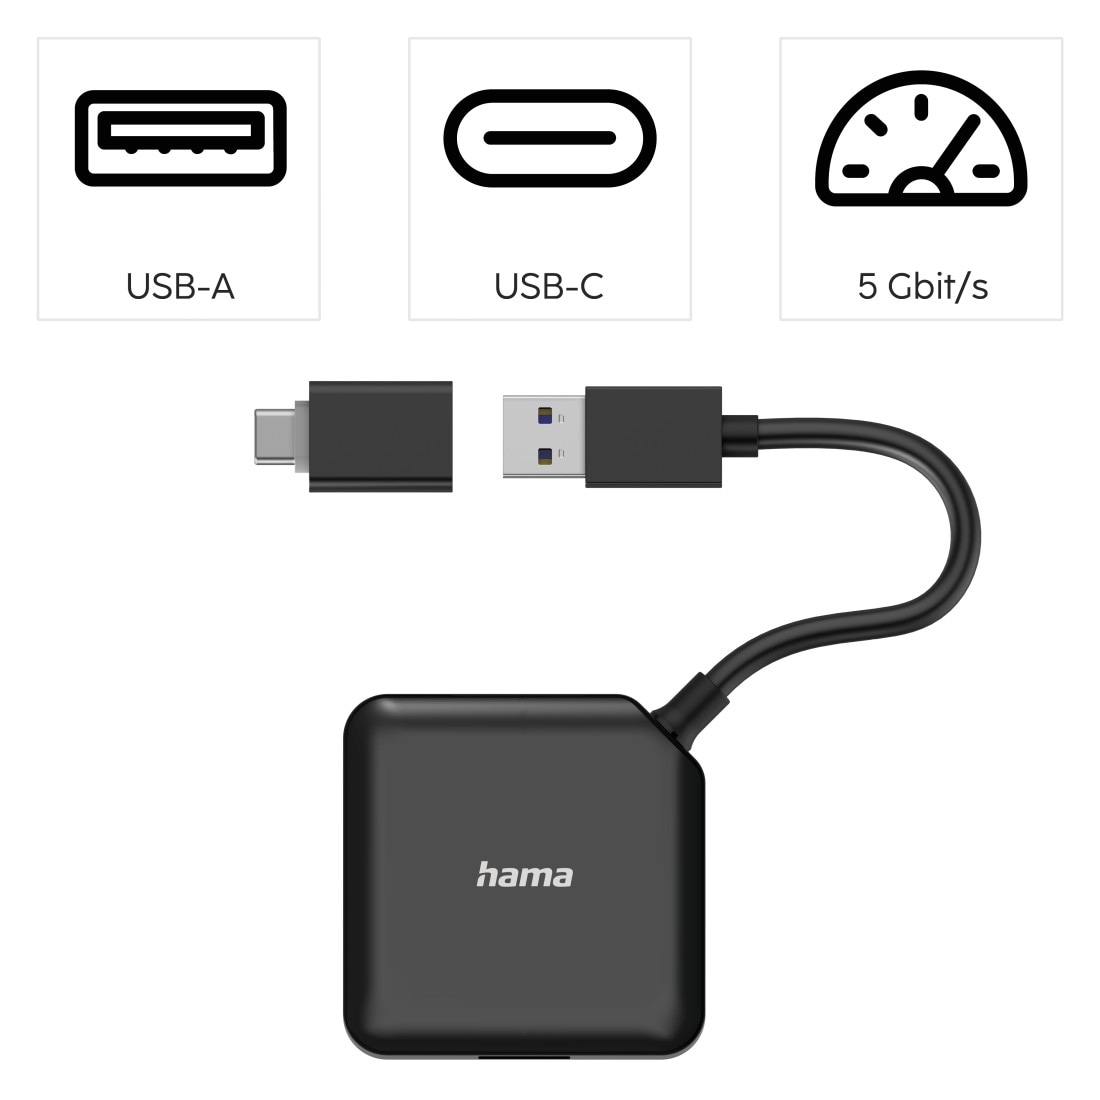 Hama USB-Adapter »USB-C Multiport Adapter Set 2 in1, USB-C, USB-A, USB 3.2 Gen1, schwarz«, USB-C zu USB Typ A, 15 cm